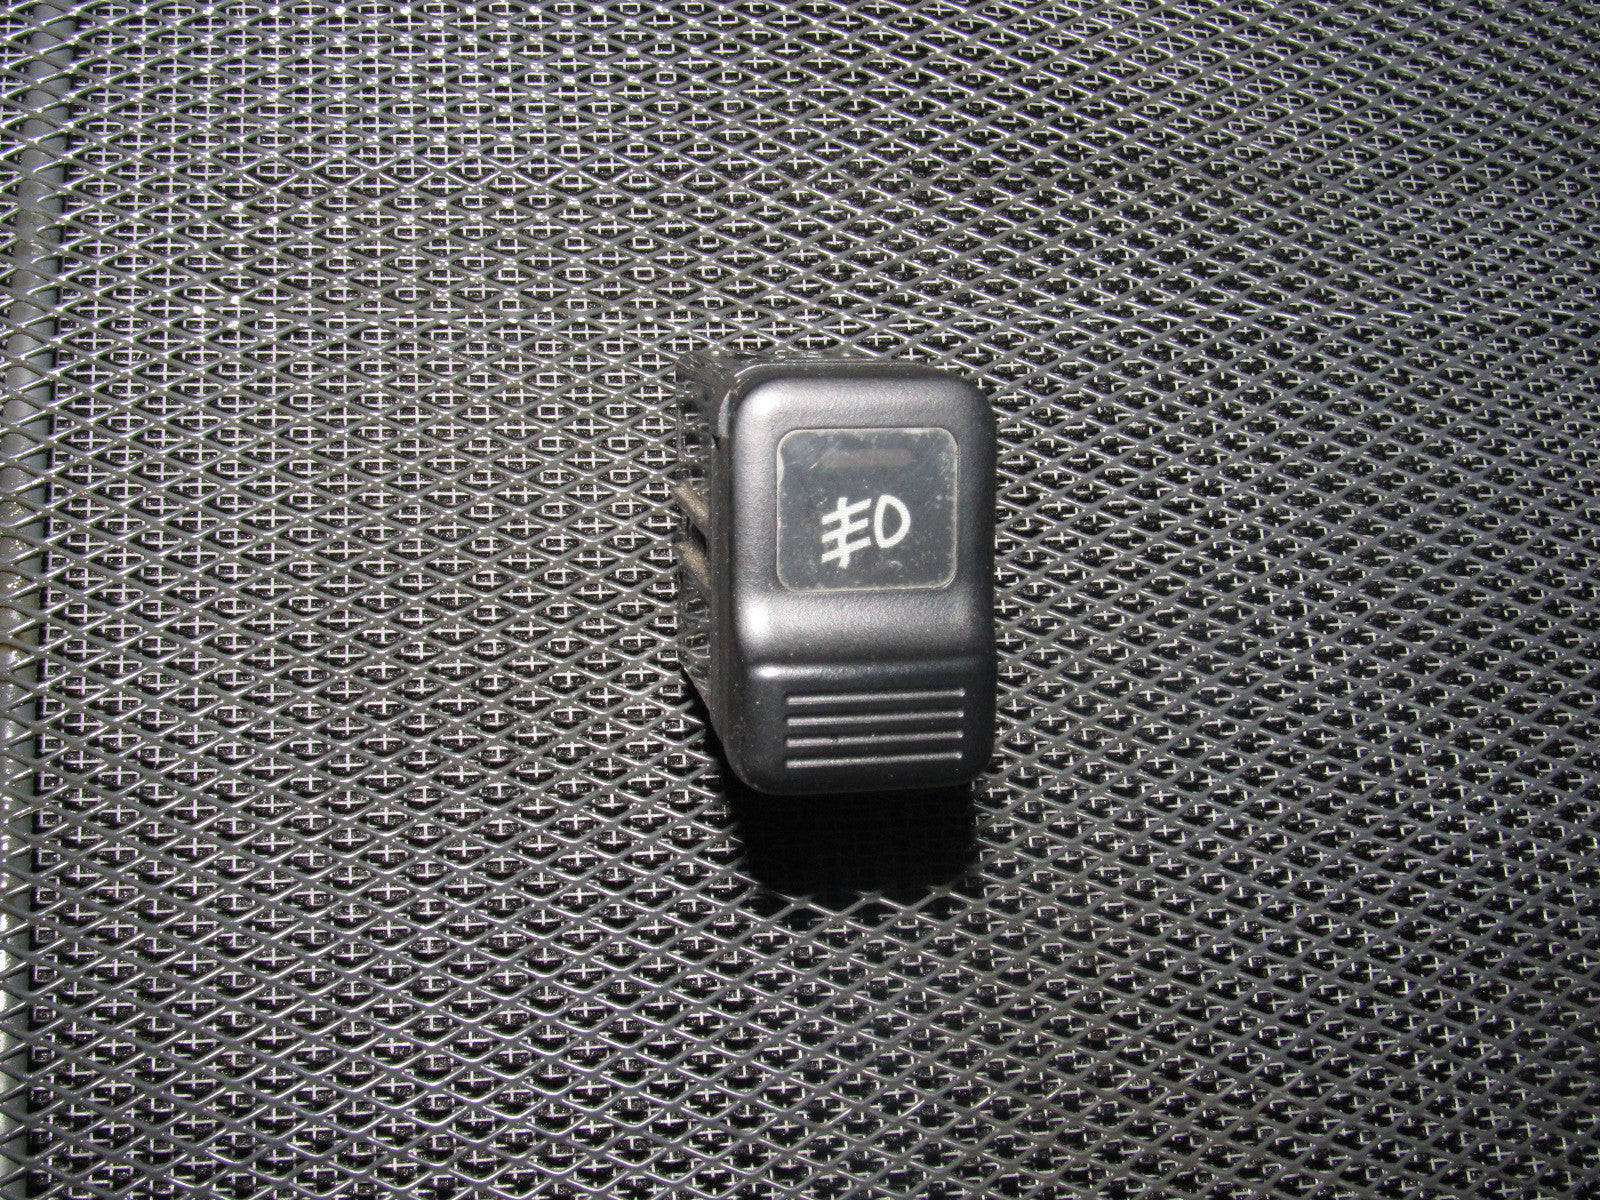 90 91 92 93 Acura Integra OEM Fog Light Switch